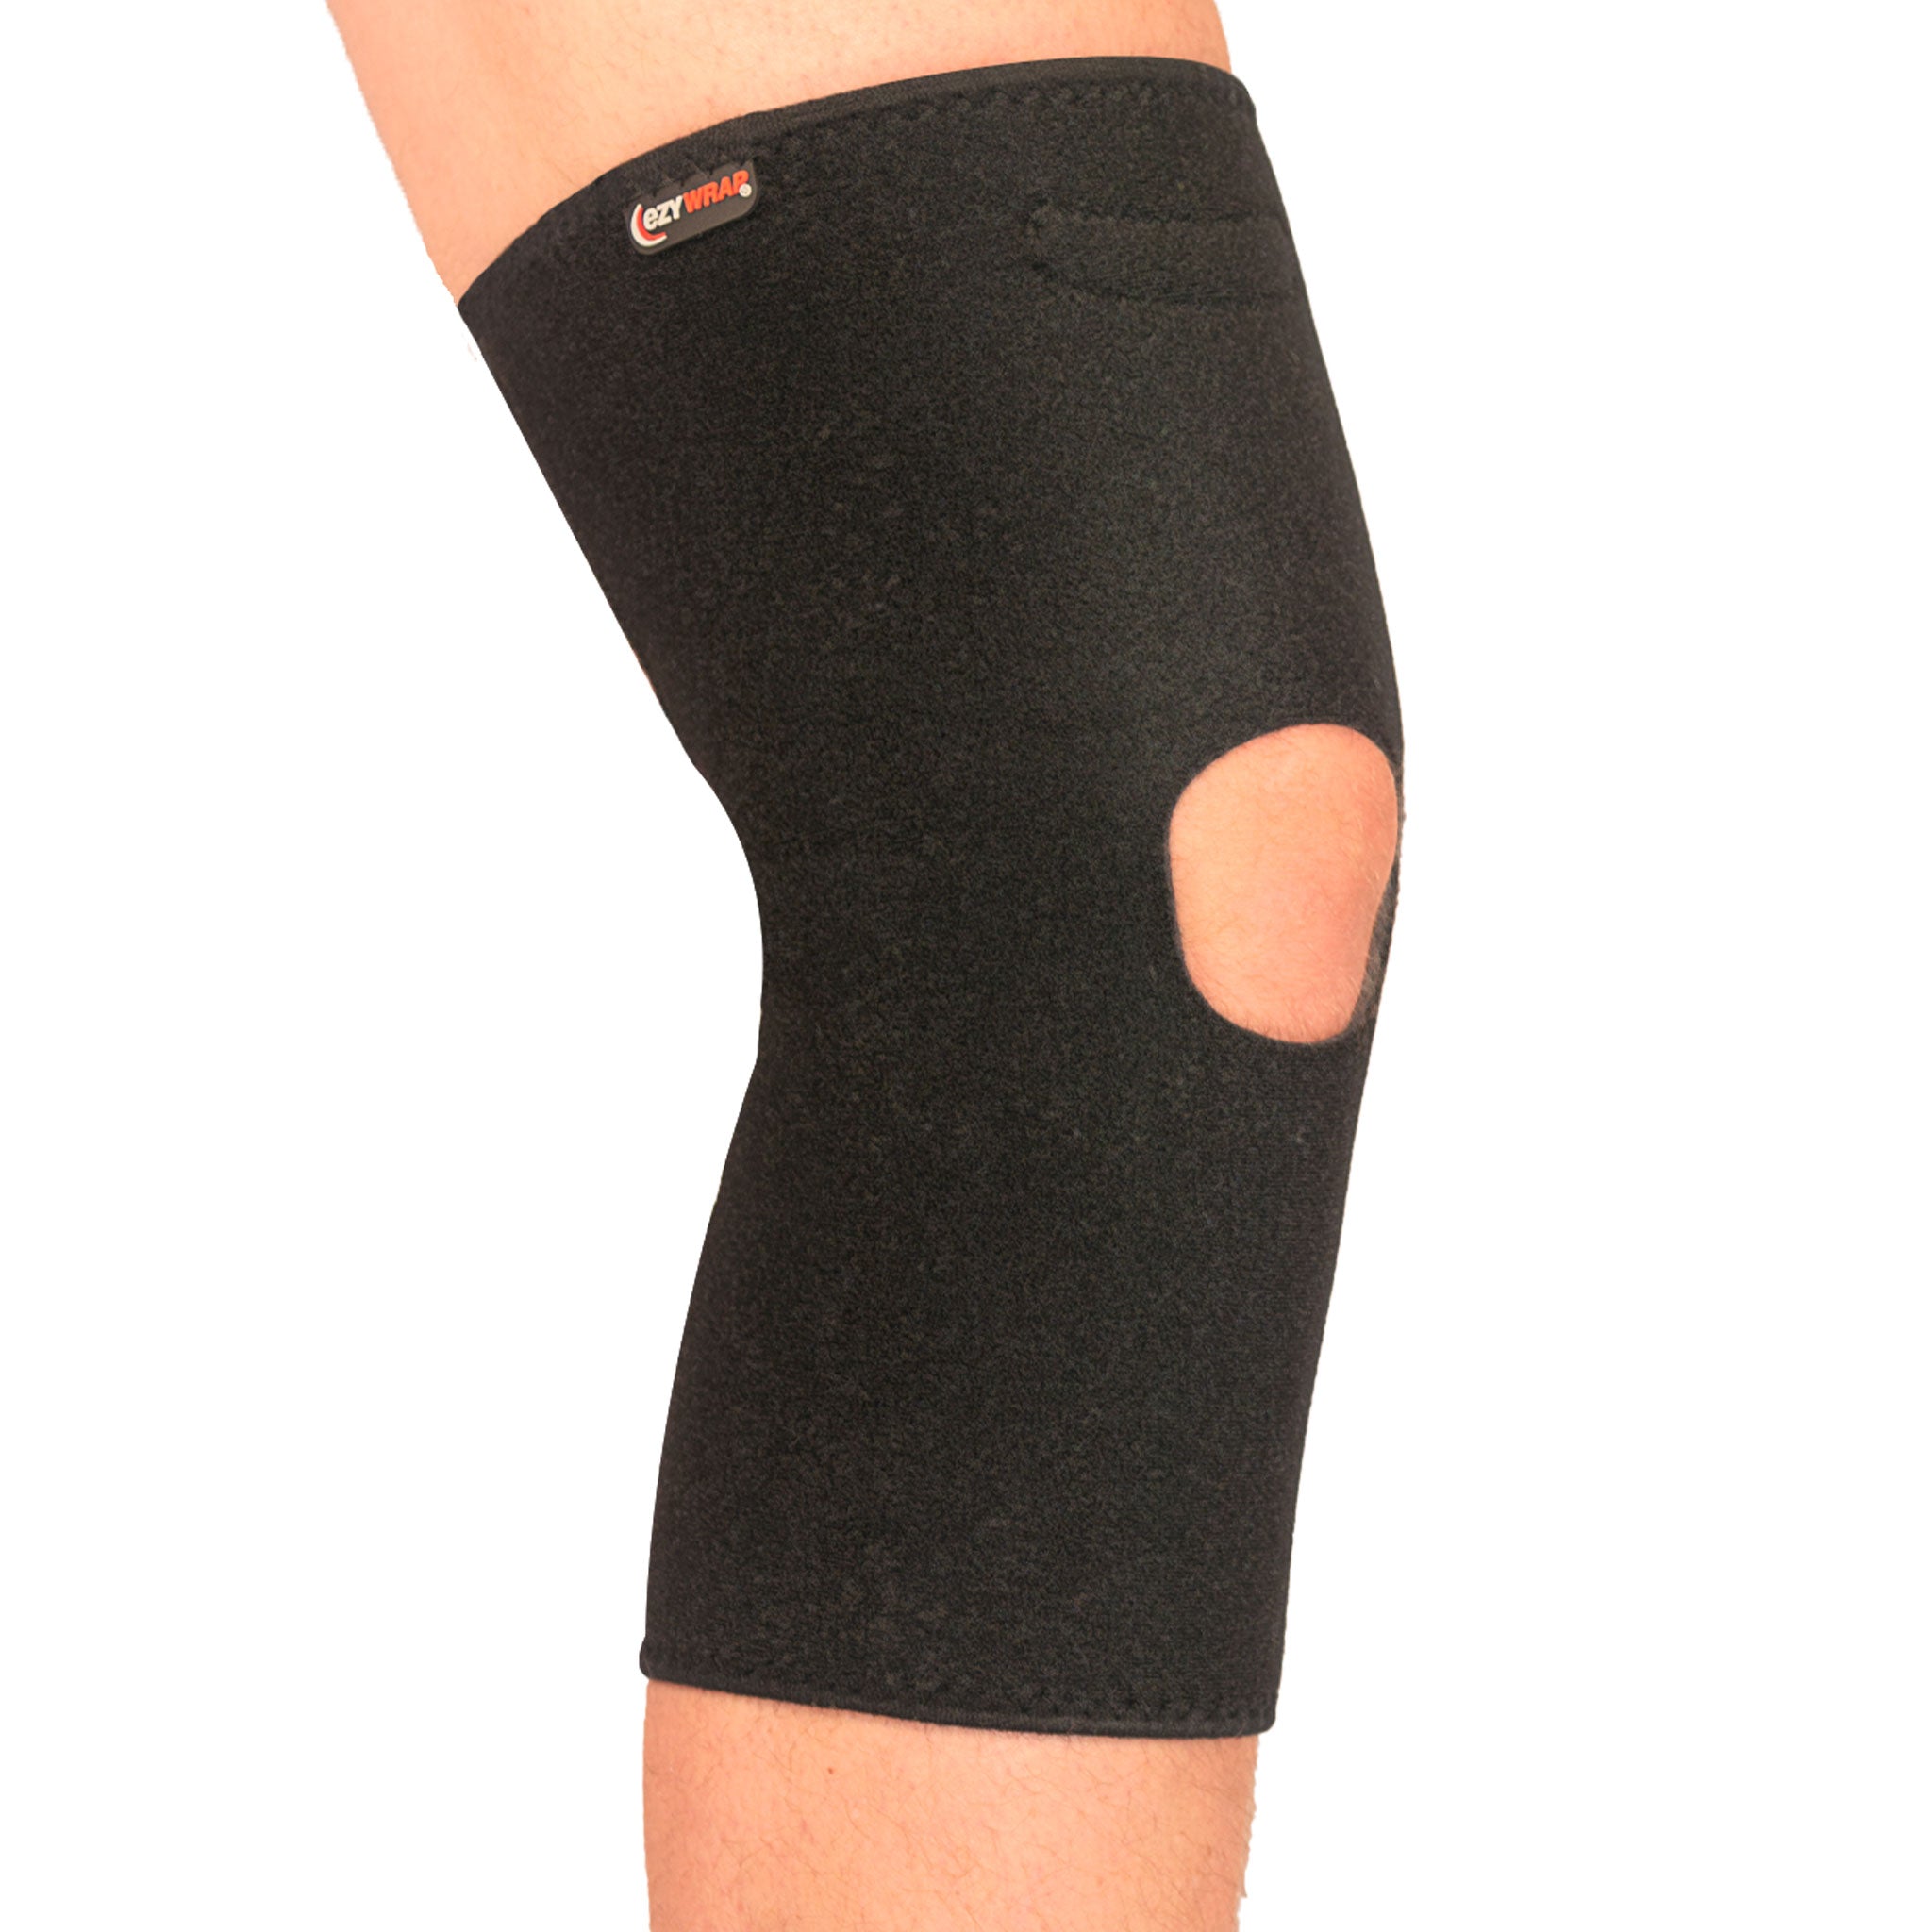 Breathable Neoprene Knee Brace / Compression Sleeve